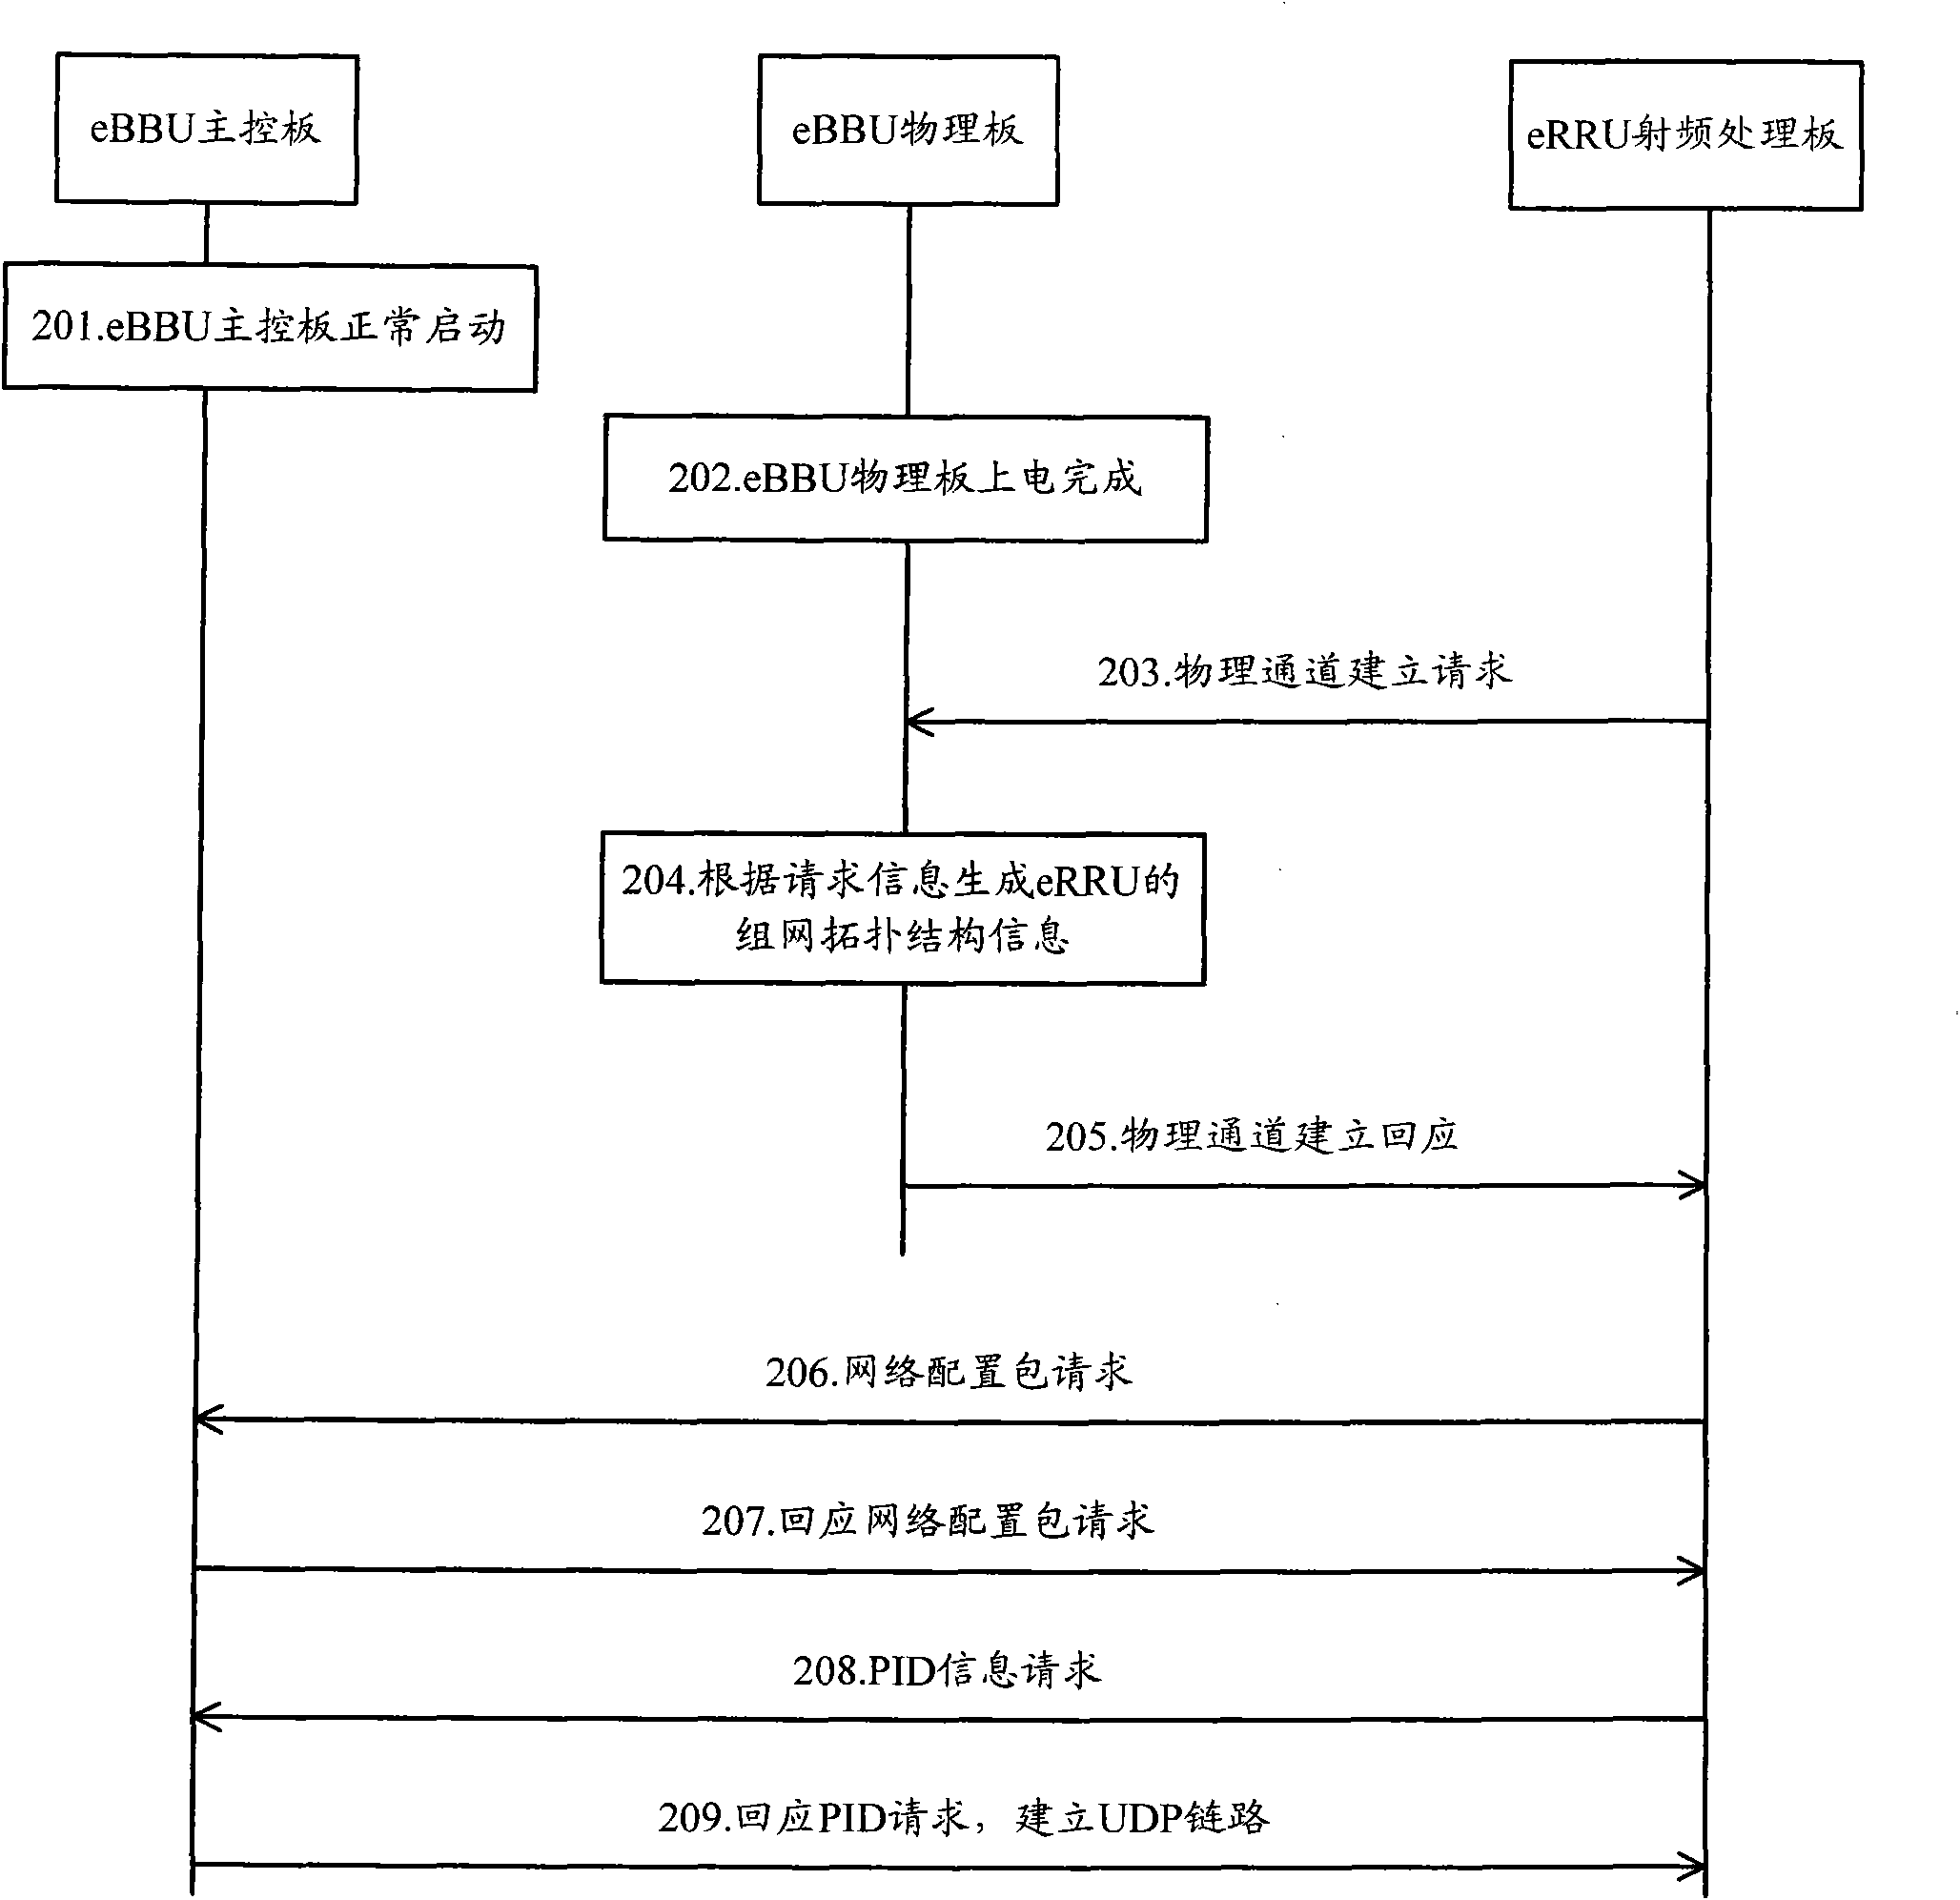 Method for starting self-configuration of evolution Remote Radio Unit